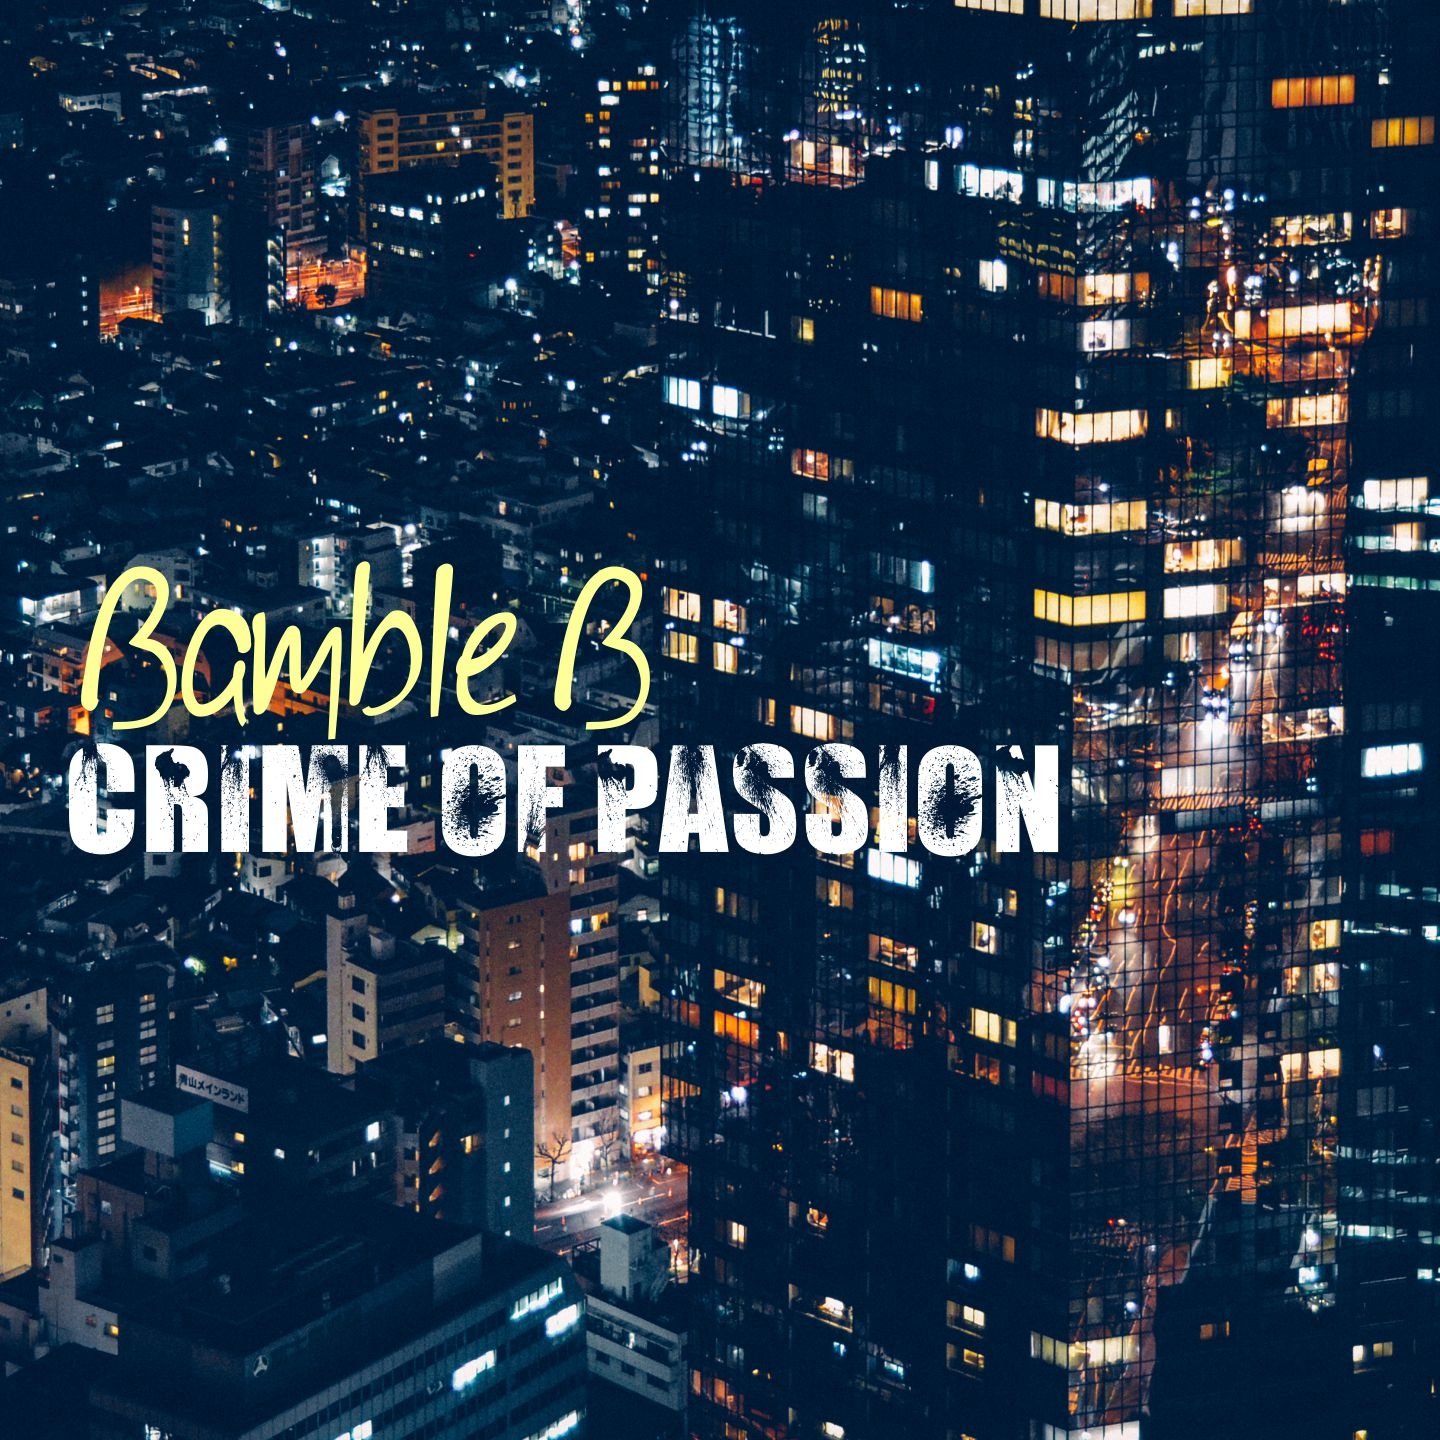 Crime of Passion (Radio Edit)